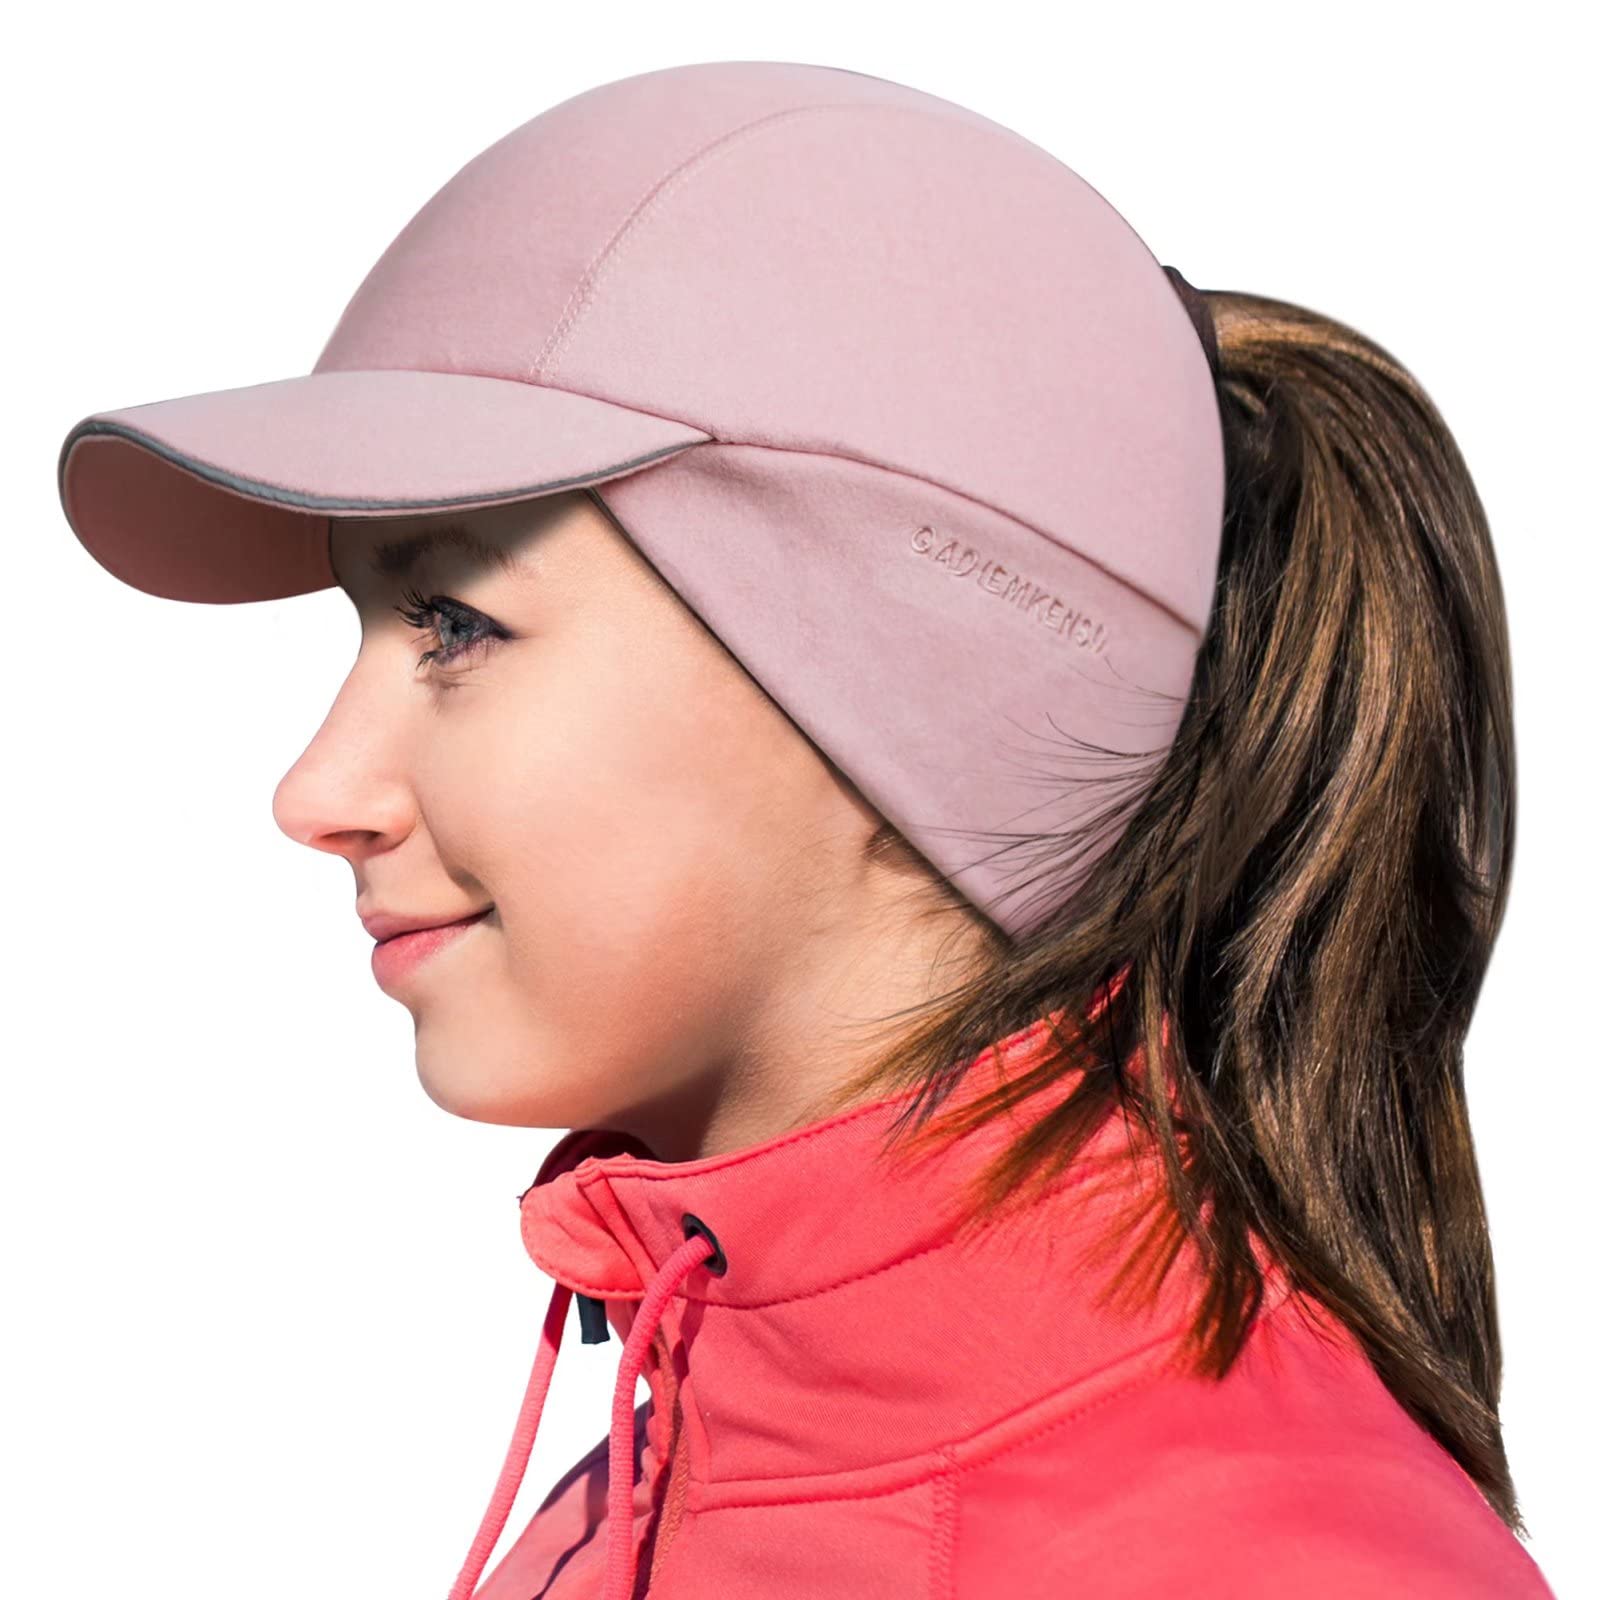 GADIEMKENSD Women's Winter Reflective Fleece Ponytail Hat with Drop Down Ear Warmer Pink